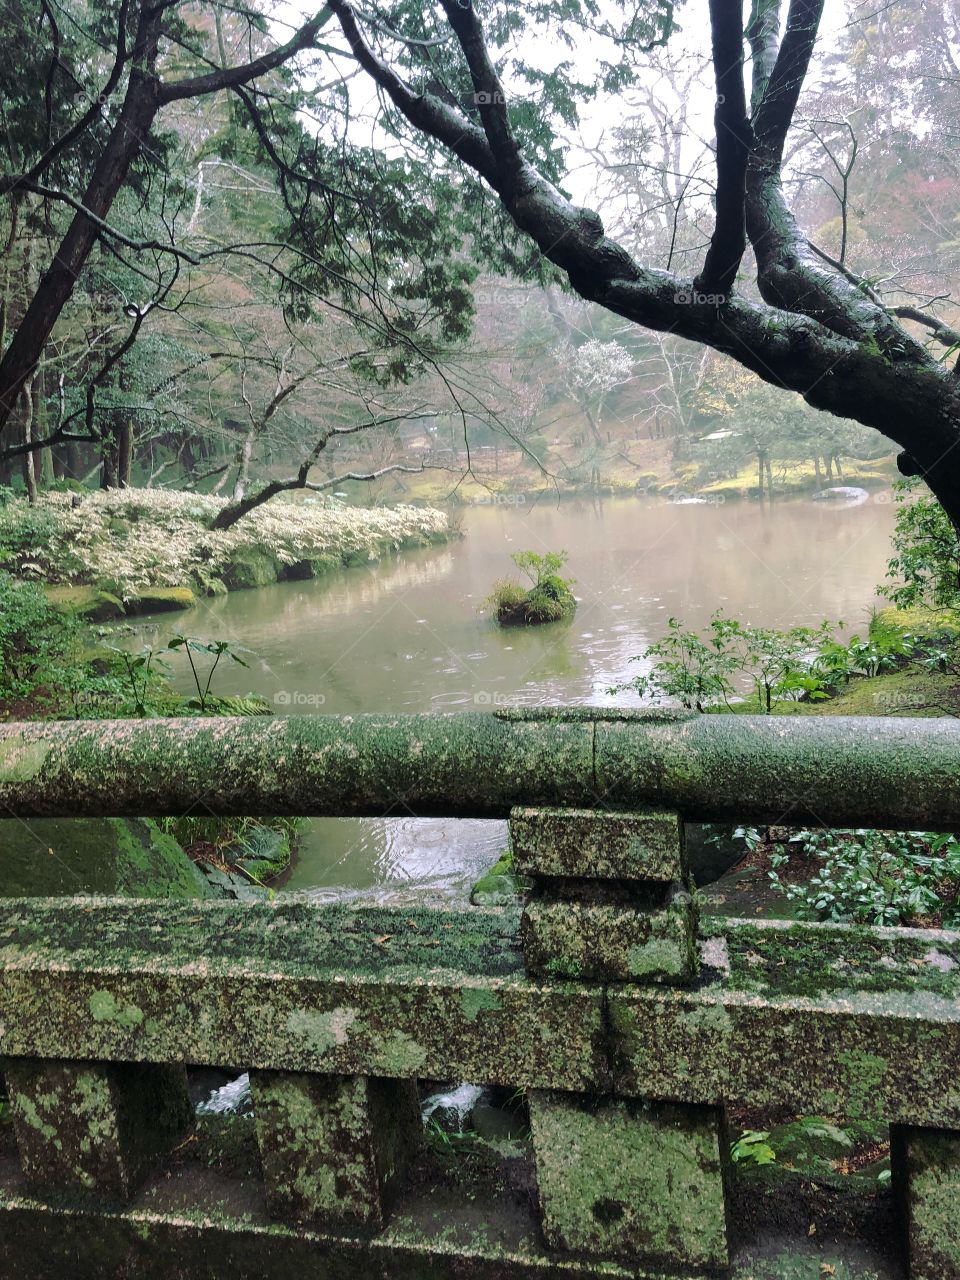 Japan trip rainy day